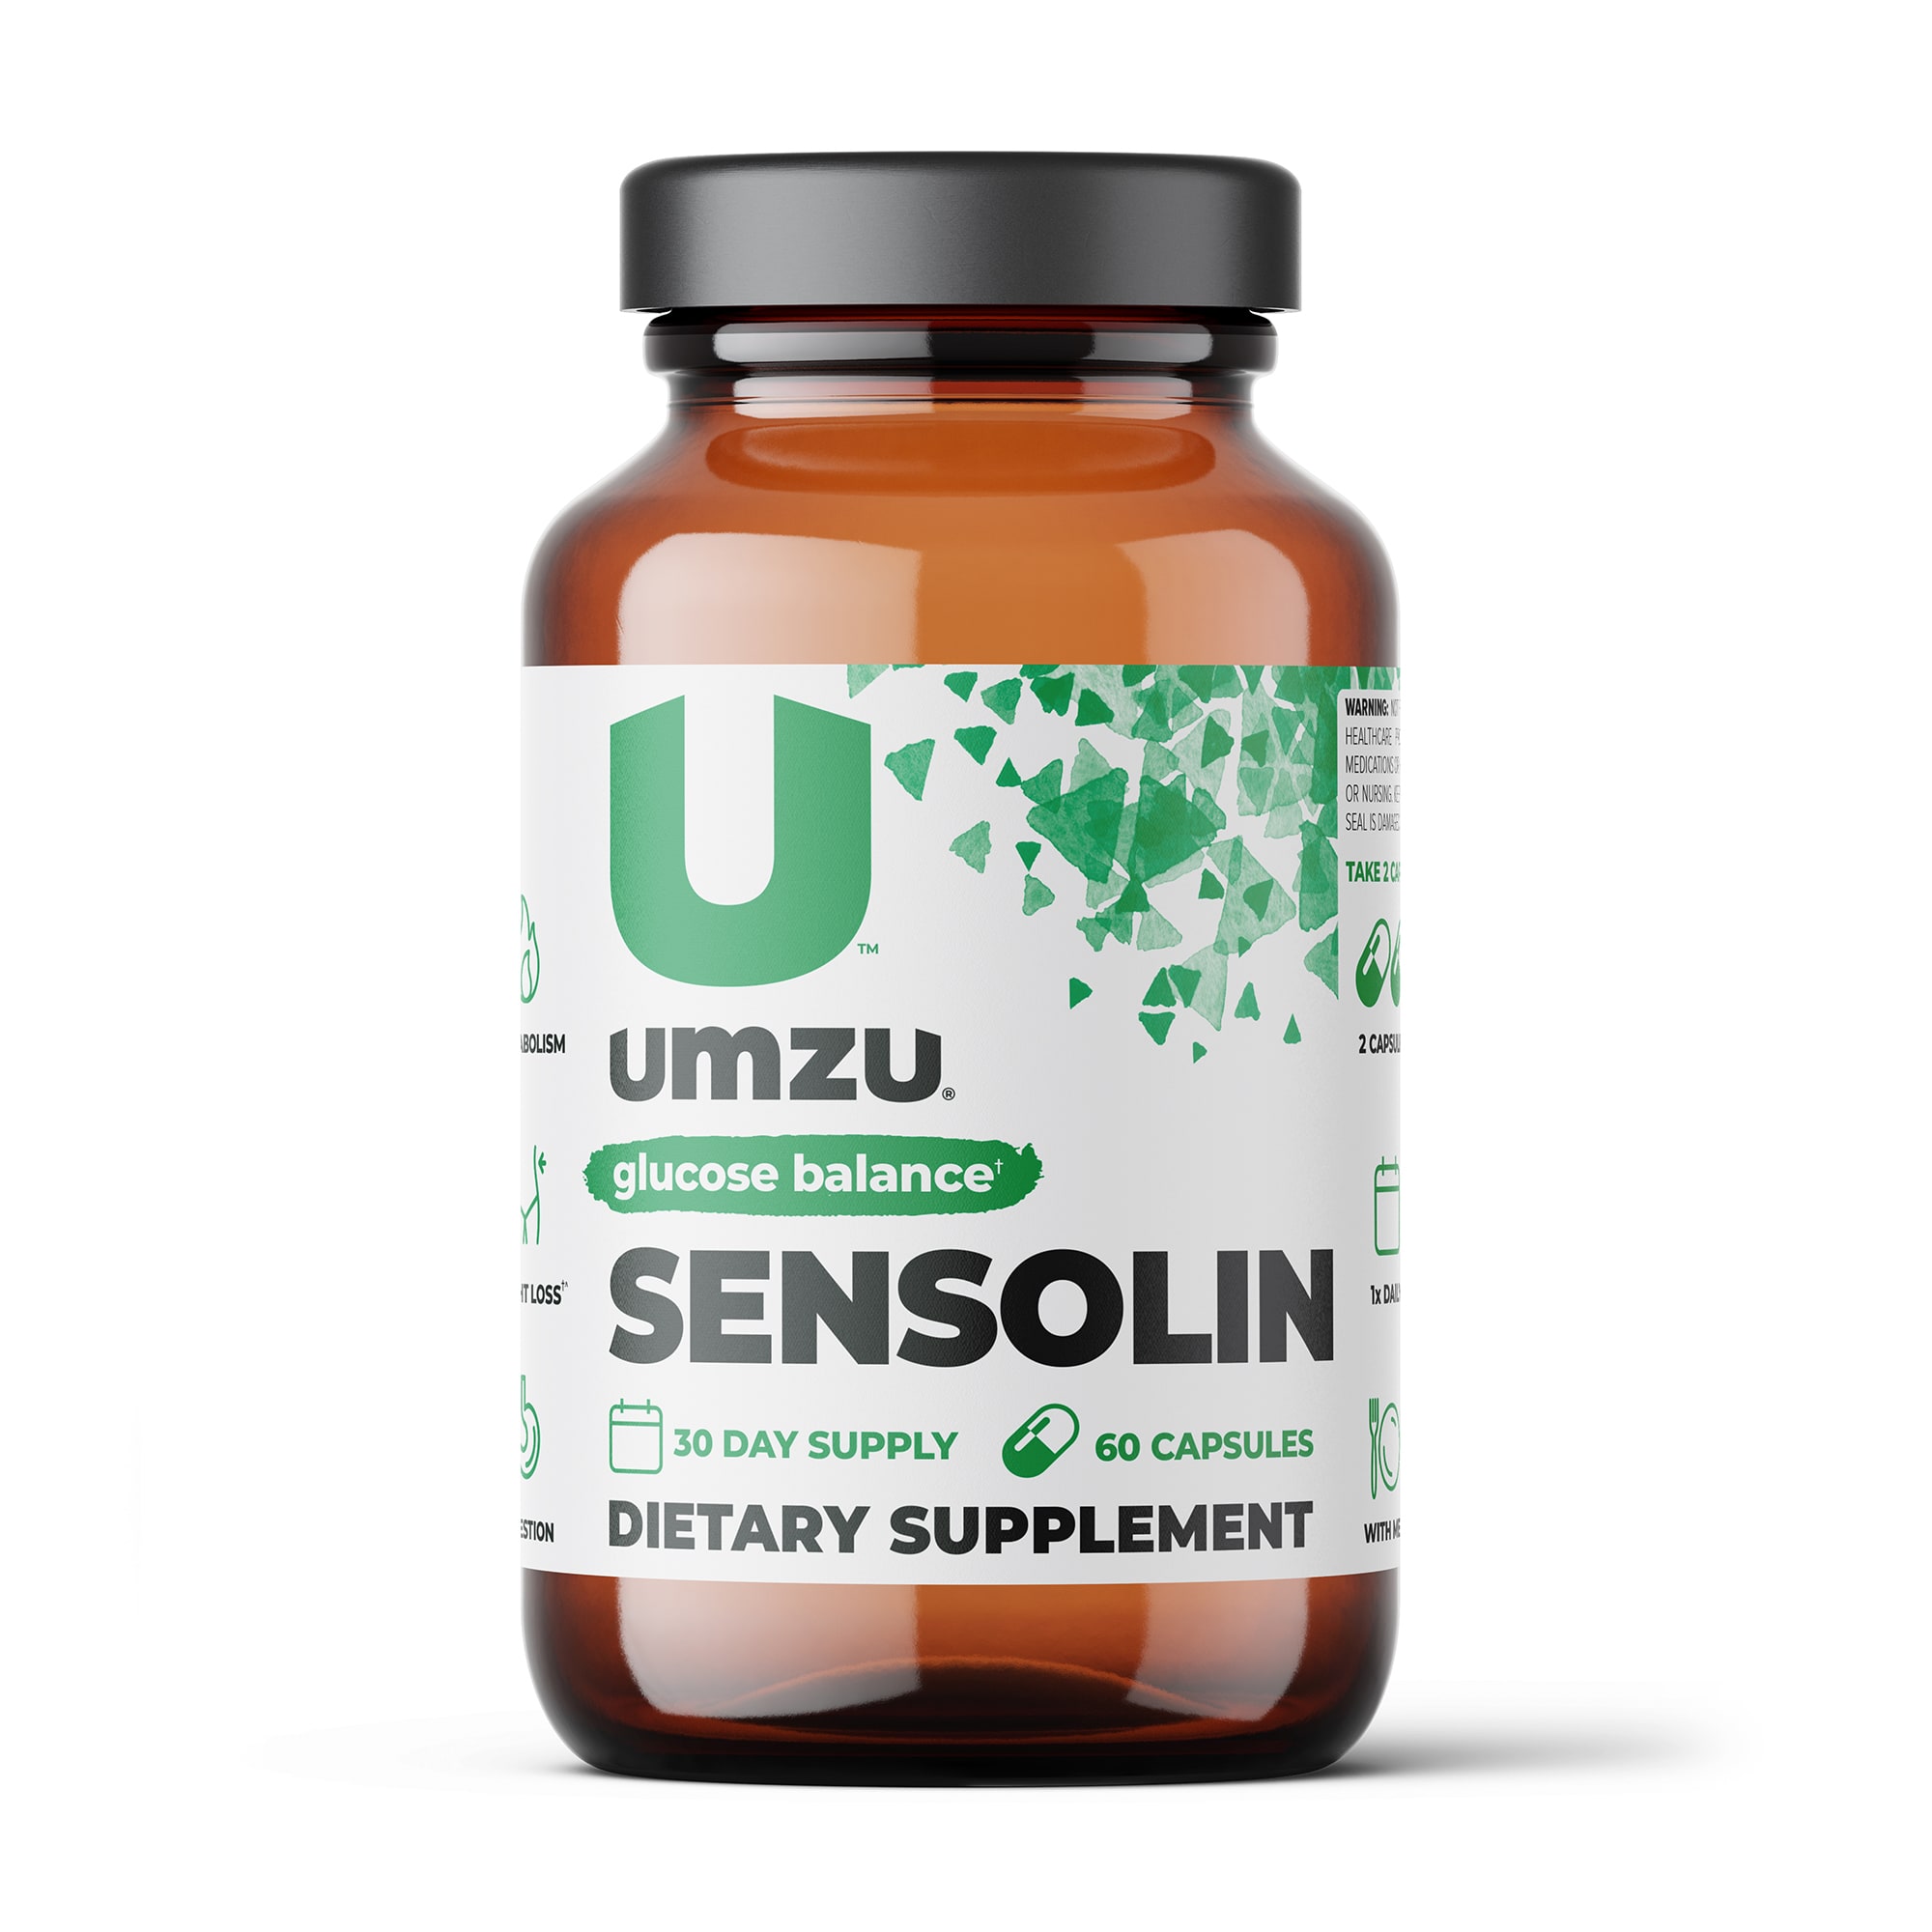 SENSOLIN: Natural Blood Sugar Support Supplement